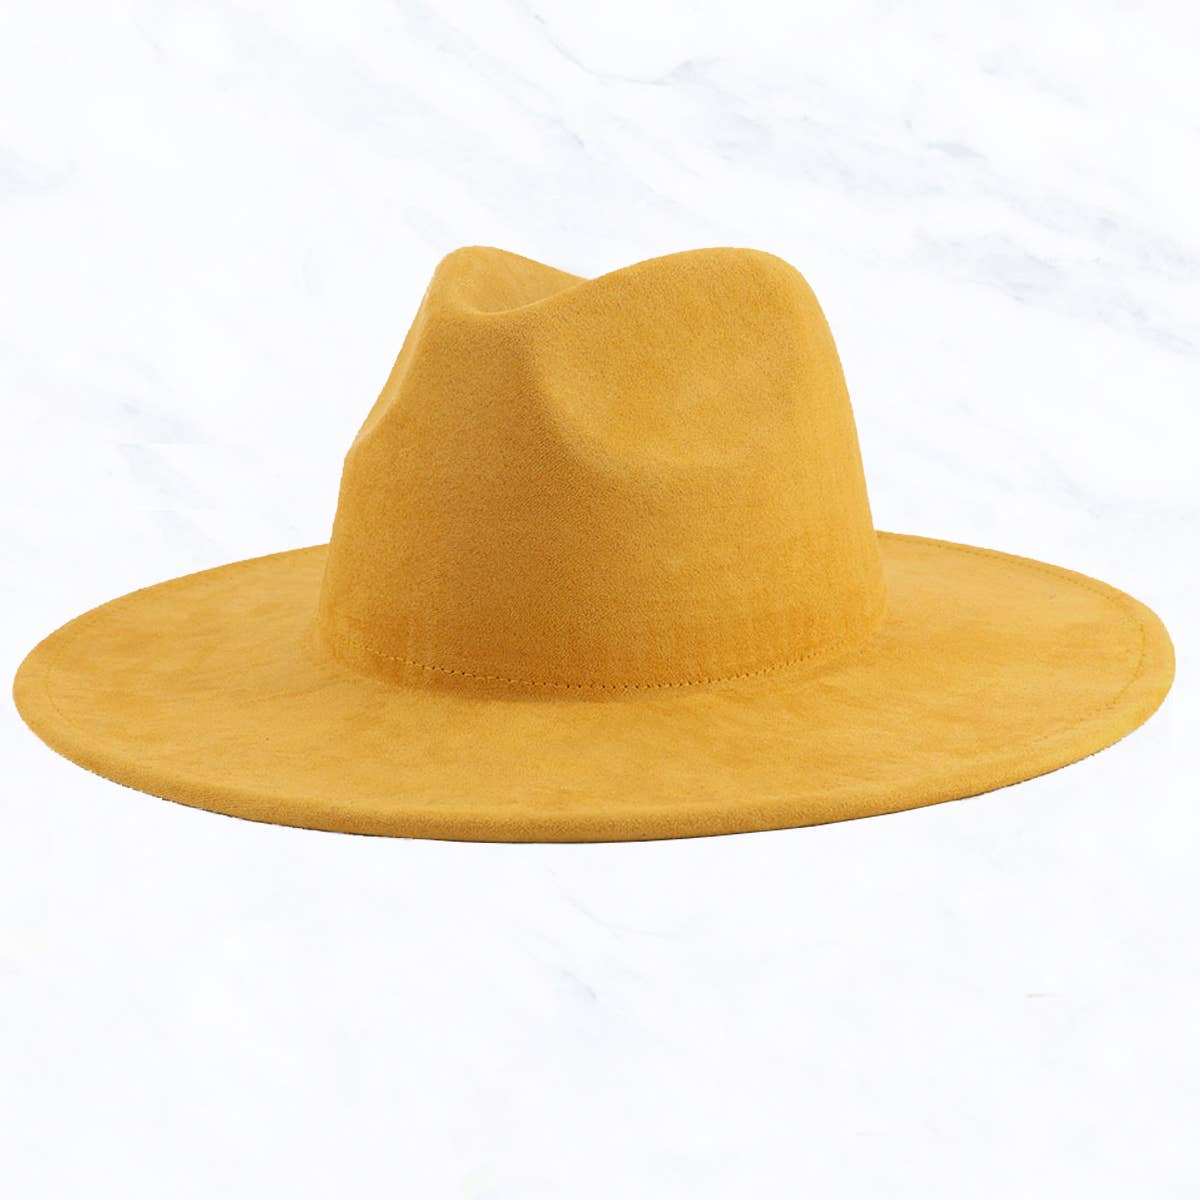 Suzie Q USA - Suede Large Eaves Peach Top Fedora Hat: New Beige